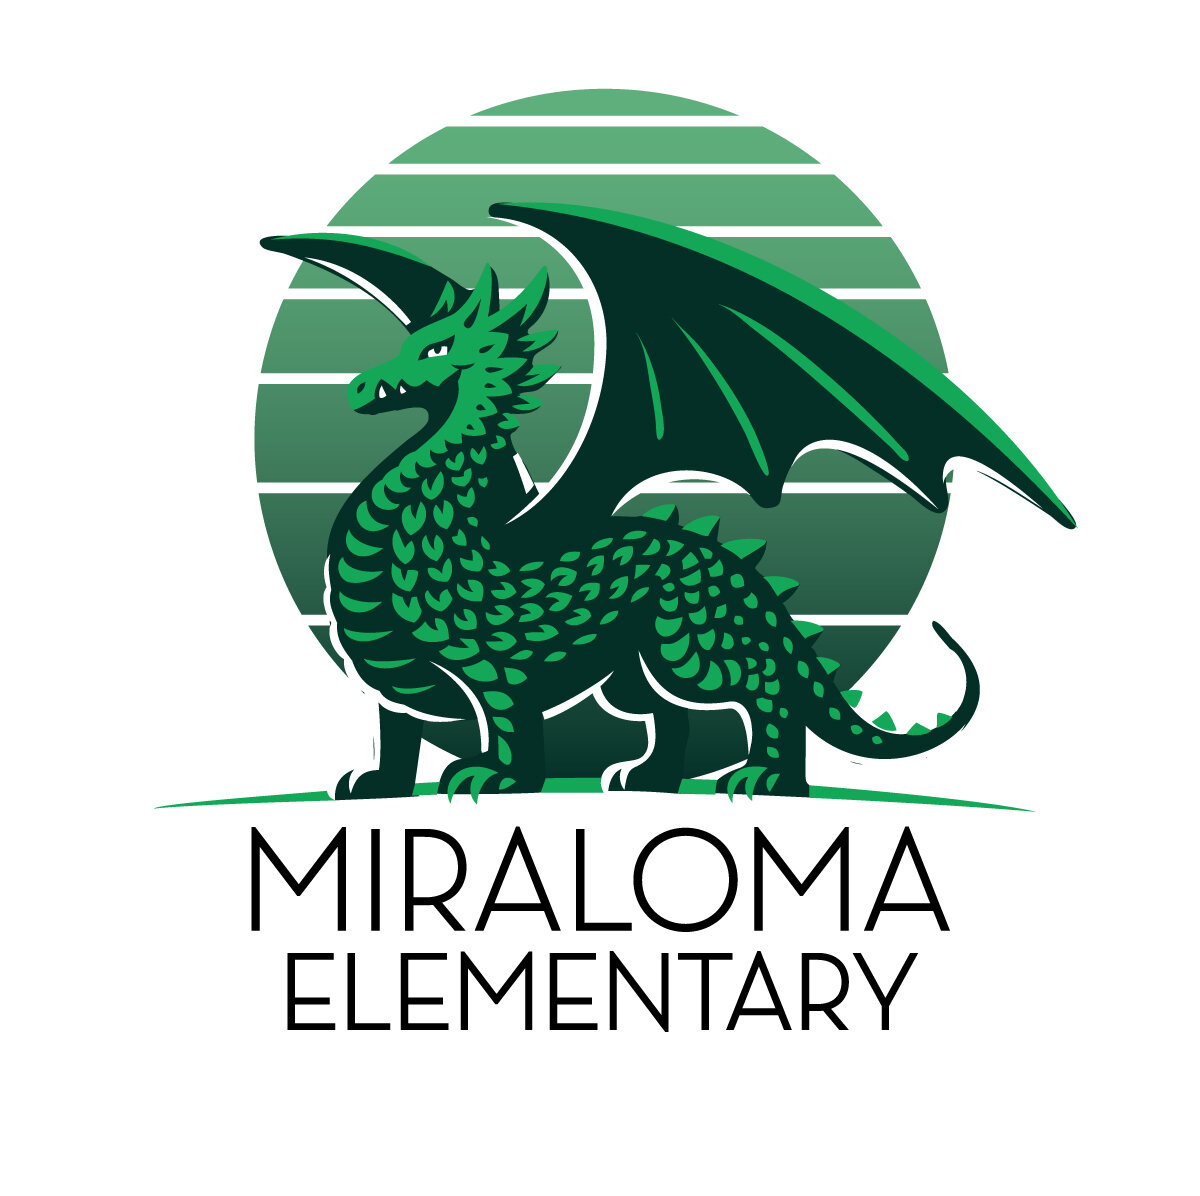 Miraloma Elementary